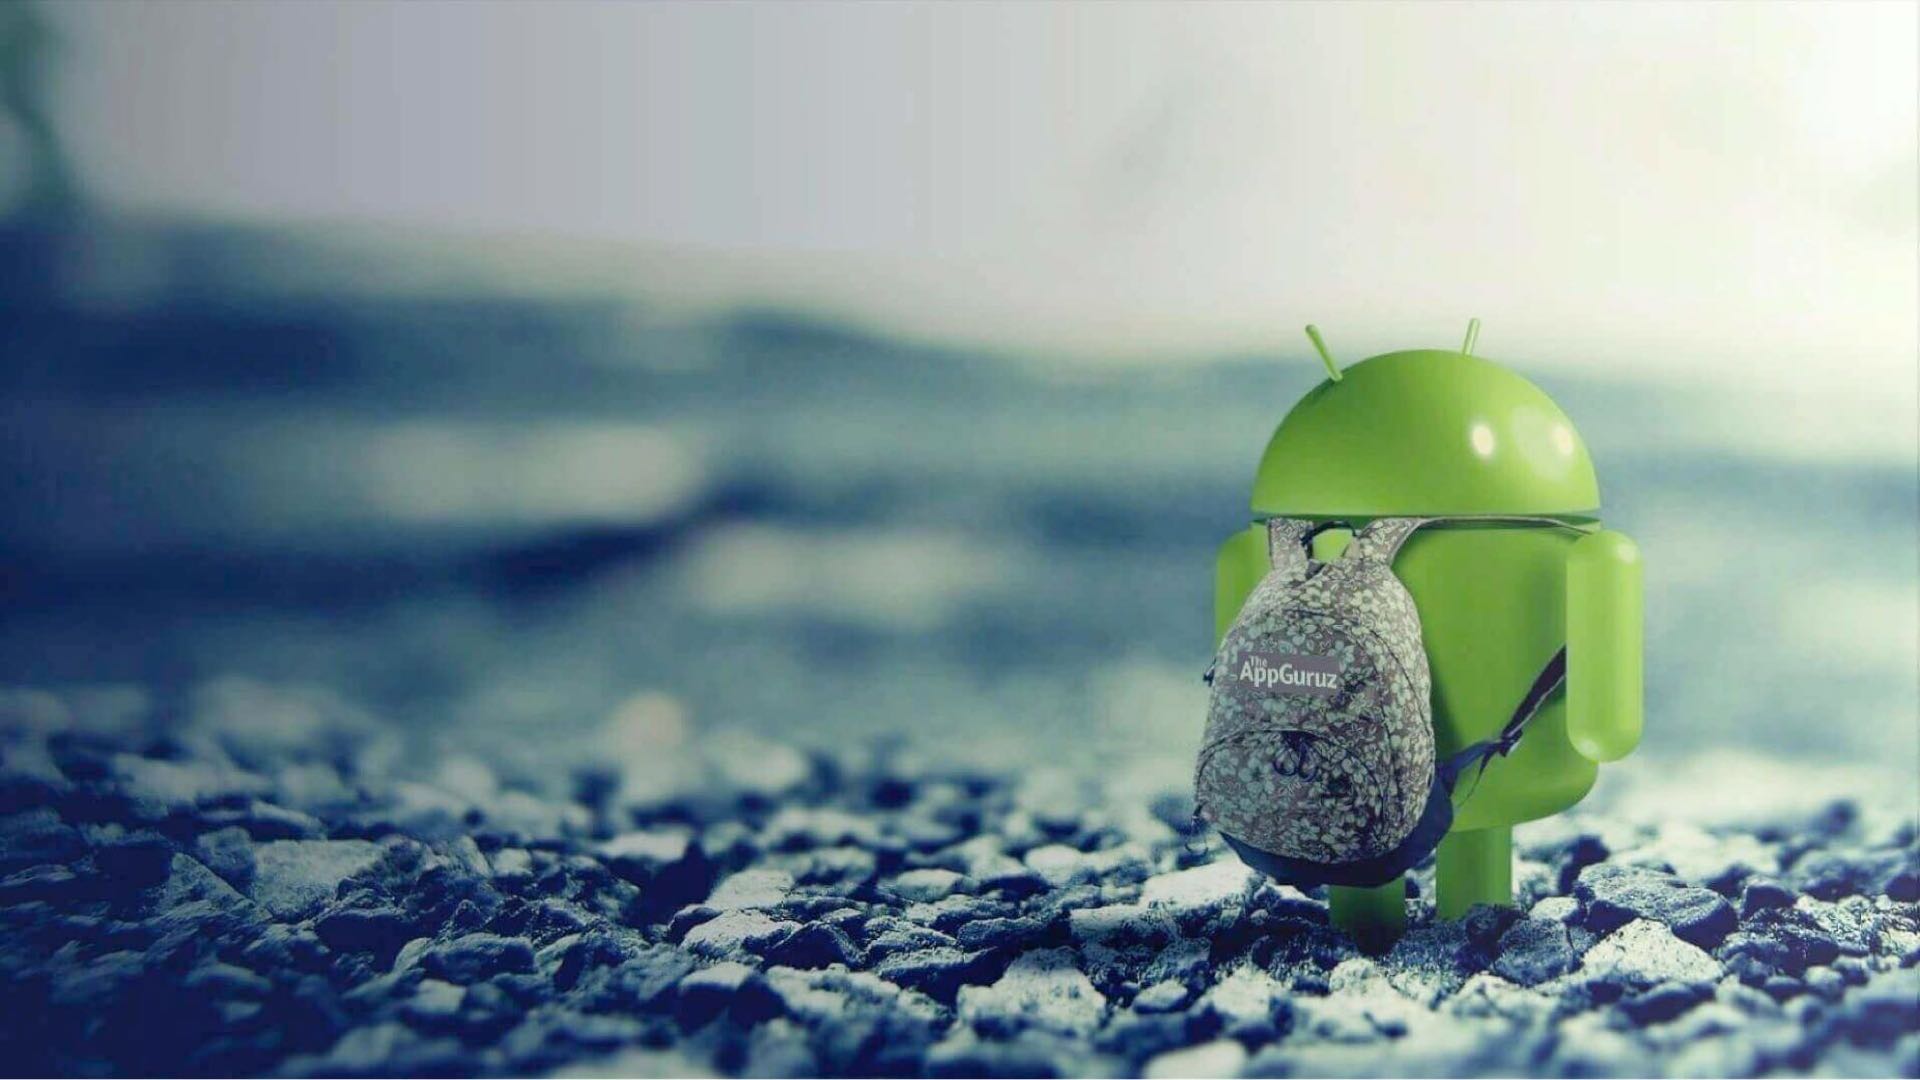 android開発者の壁紙,緑,水,凍結,写真撮影,静物写真